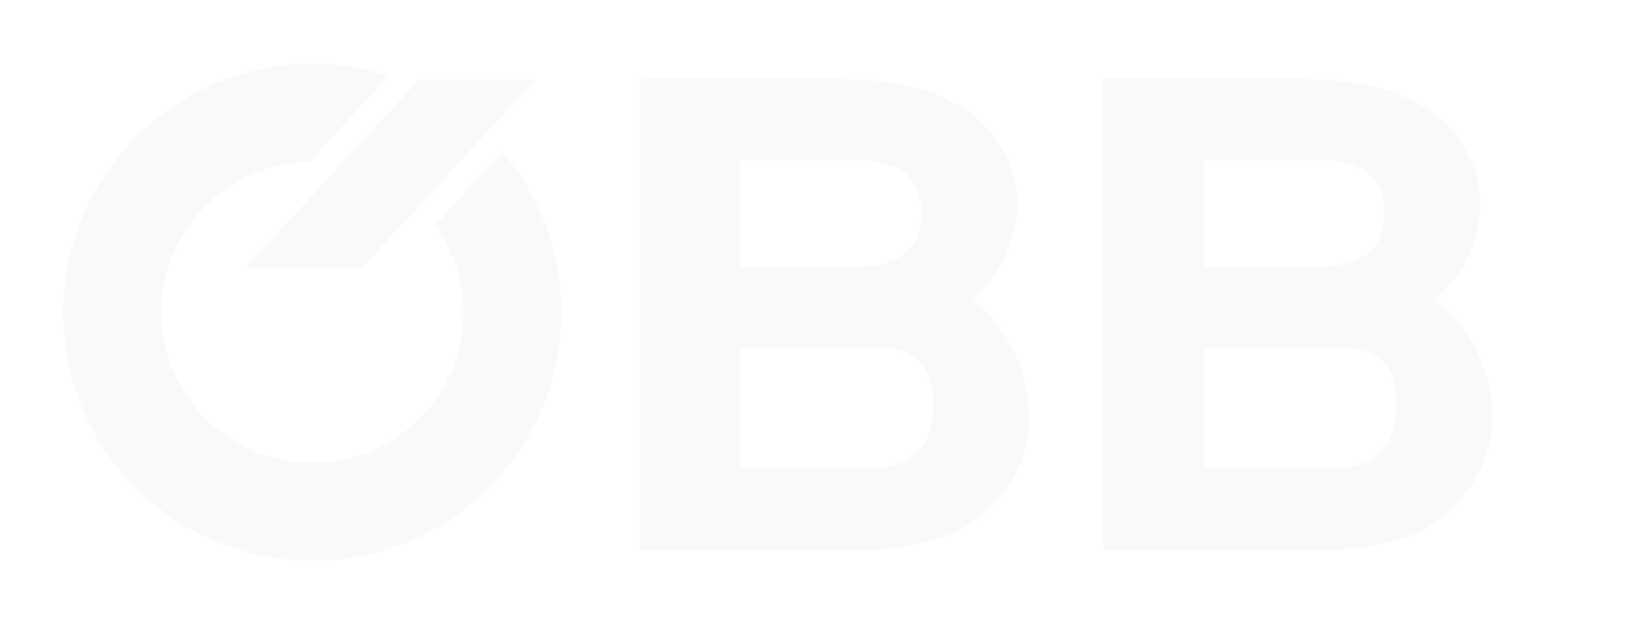 6 ÖBB Logo